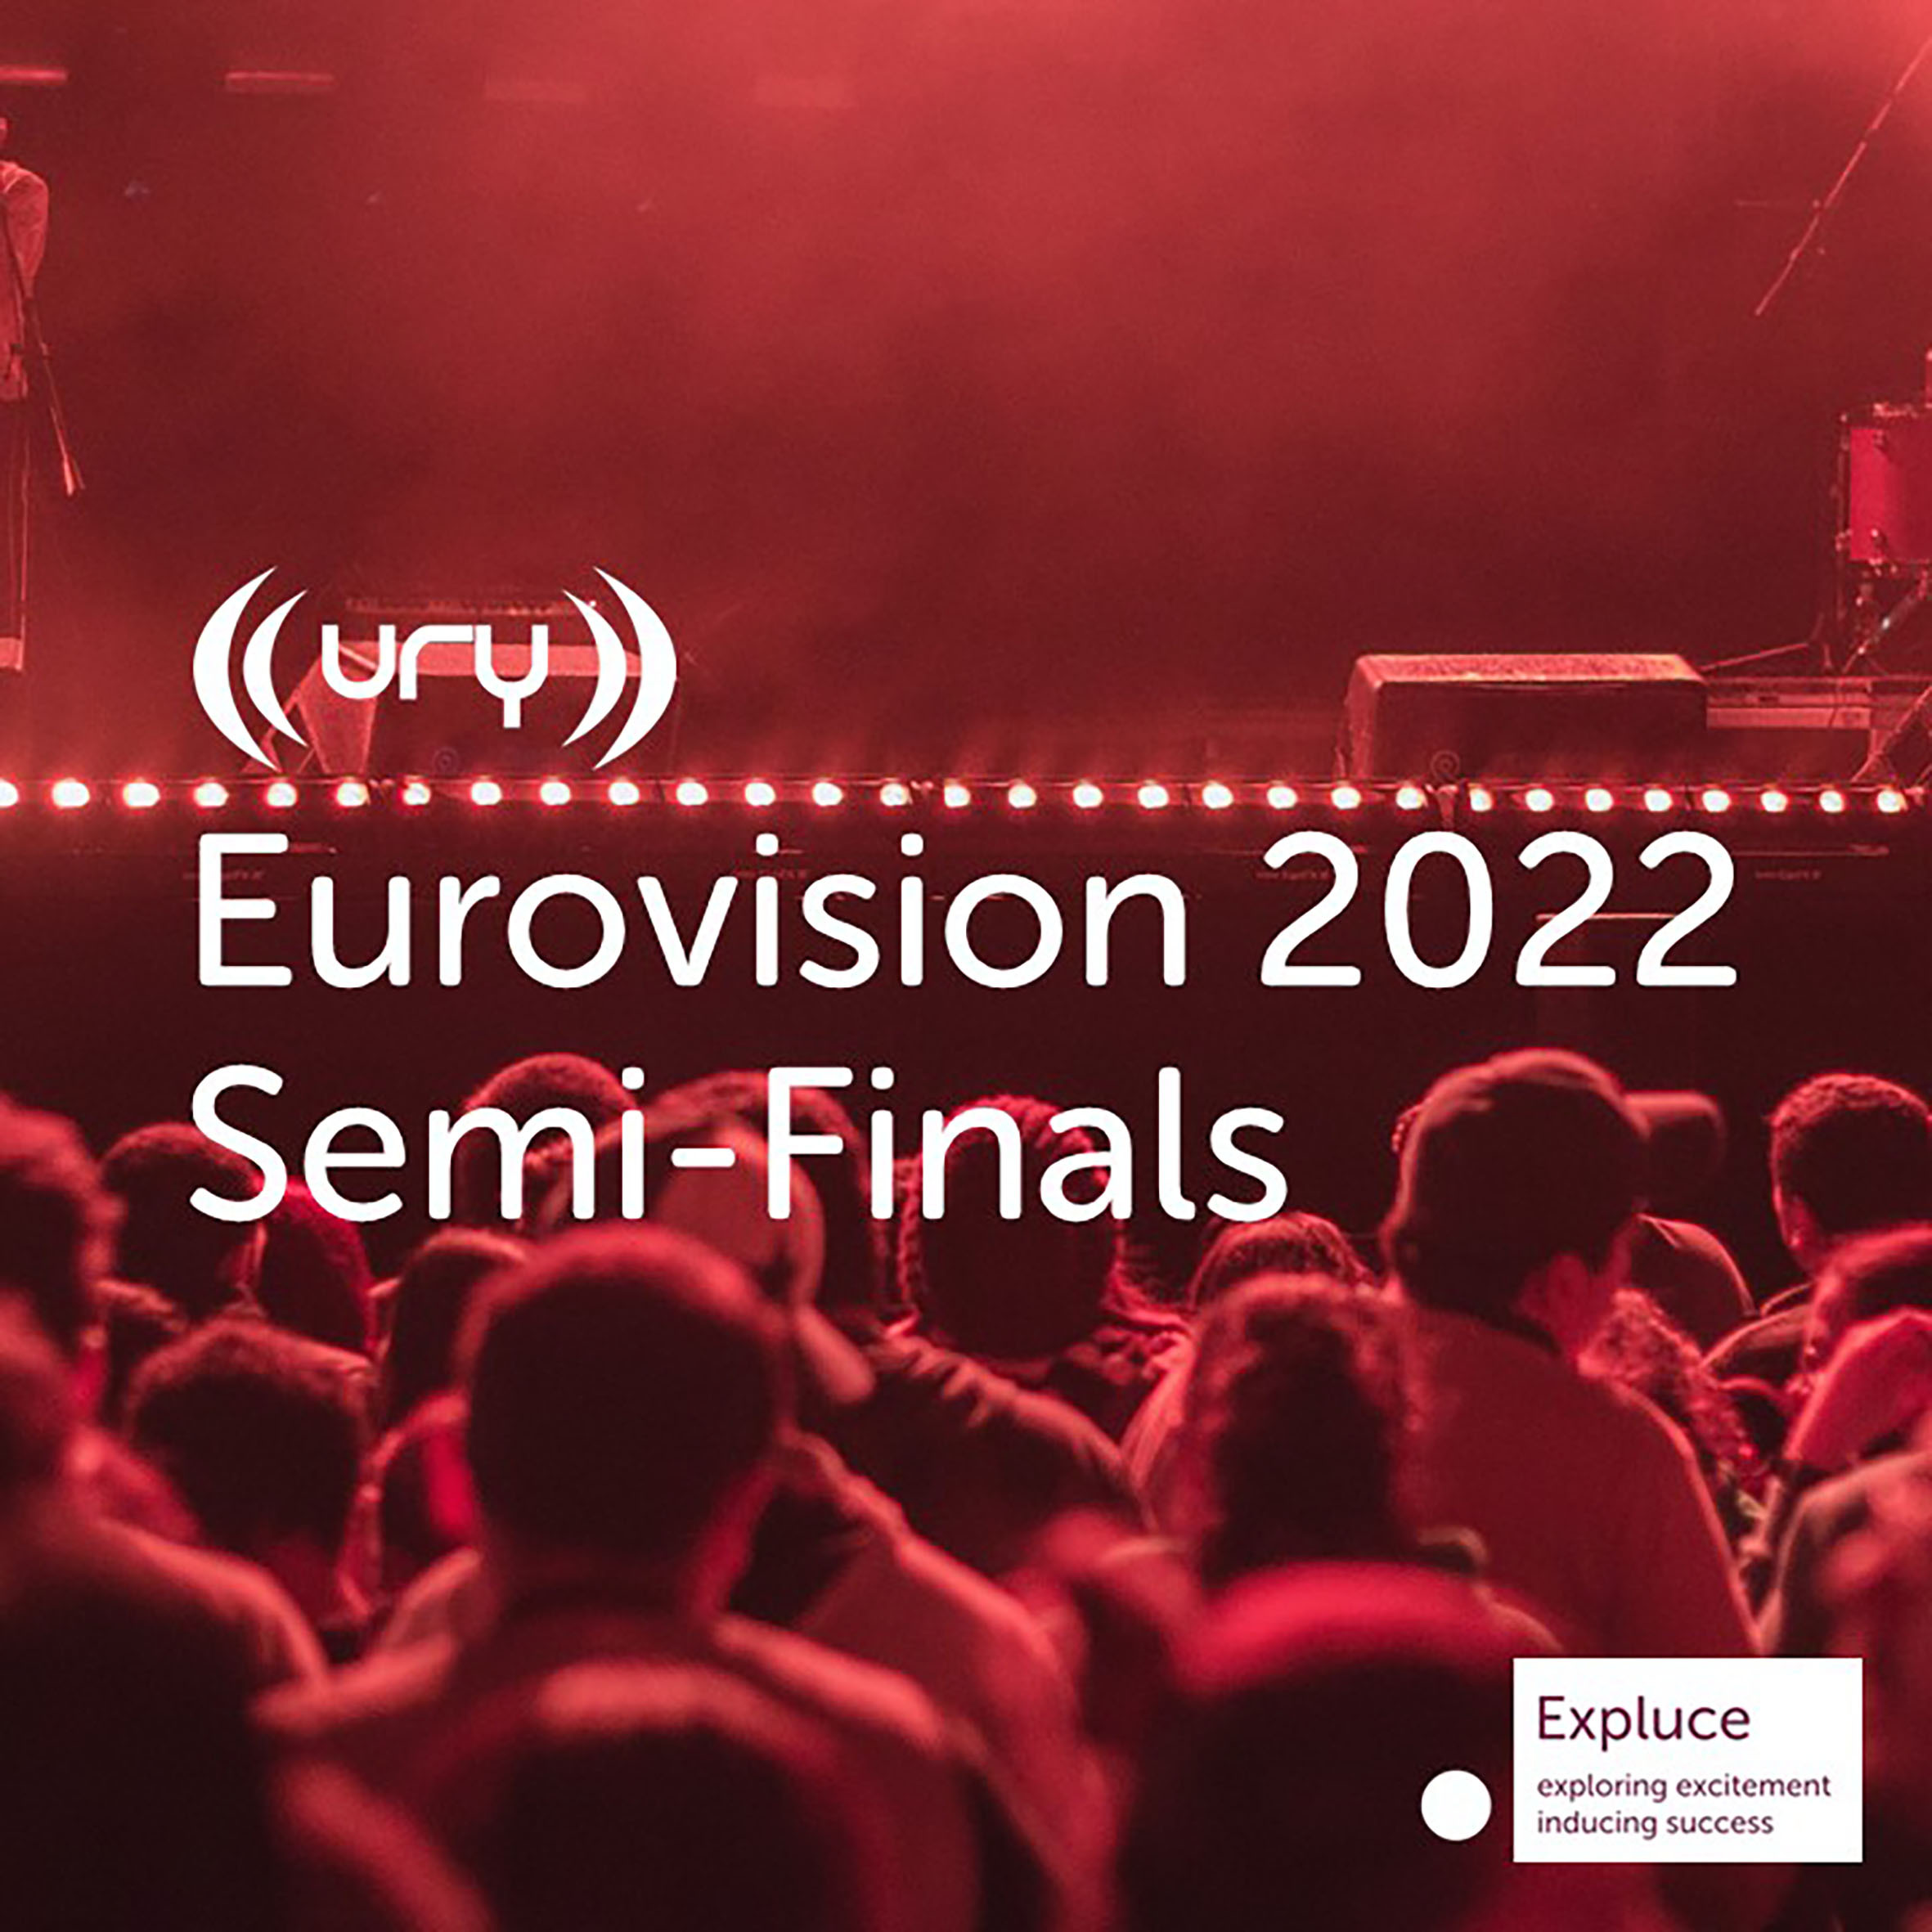 Eurovision 2022: Semi-Finals logo.